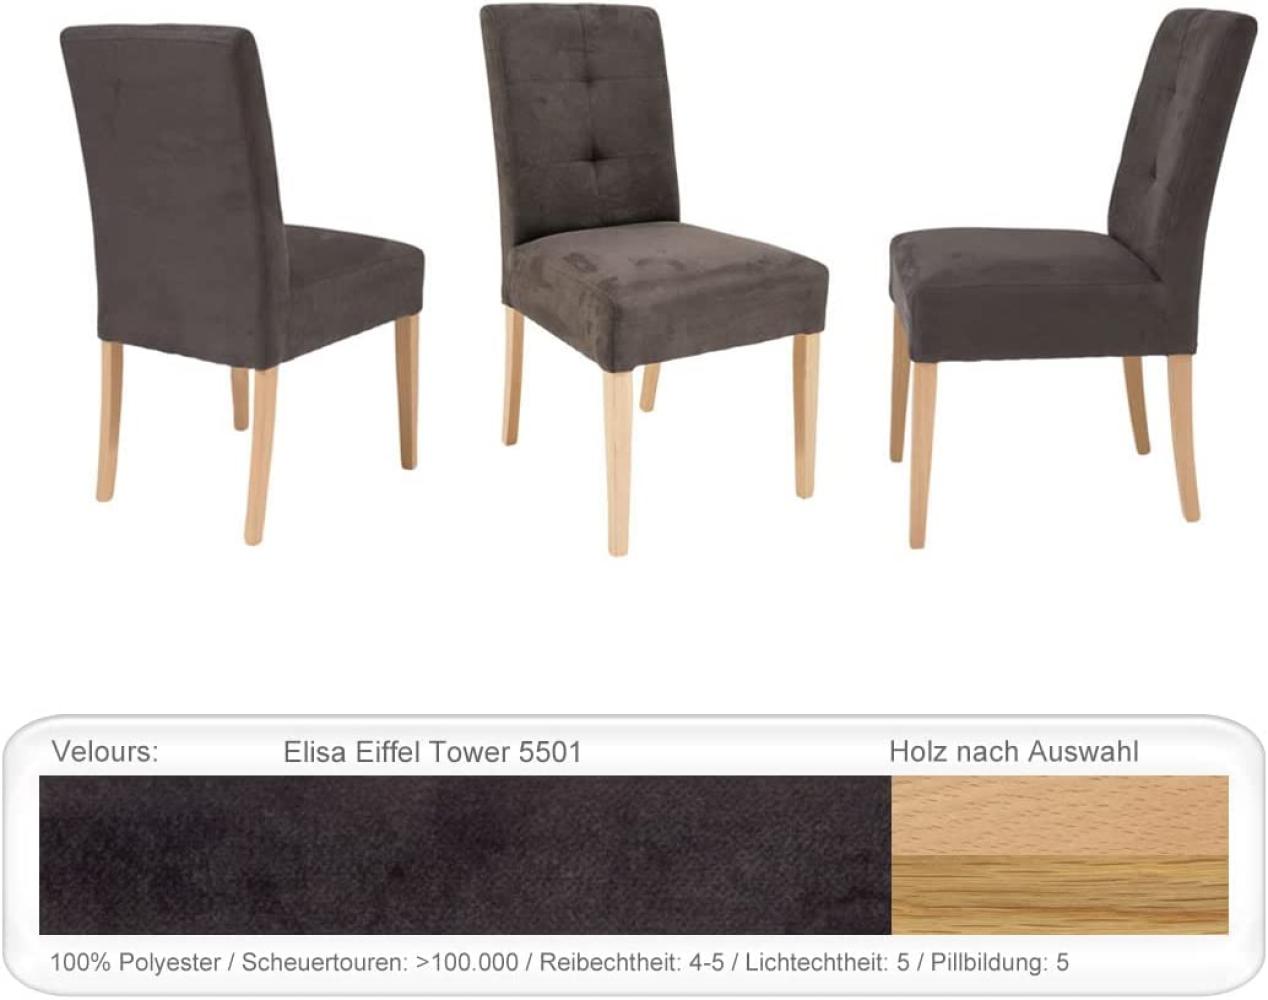 6x Stuhl Agnes 2 Varianten Polsterstuhl Esszimmerstuhl Massivholzstuhl Buche natur lackiert, Elisa Eiffel Tower Bild 1